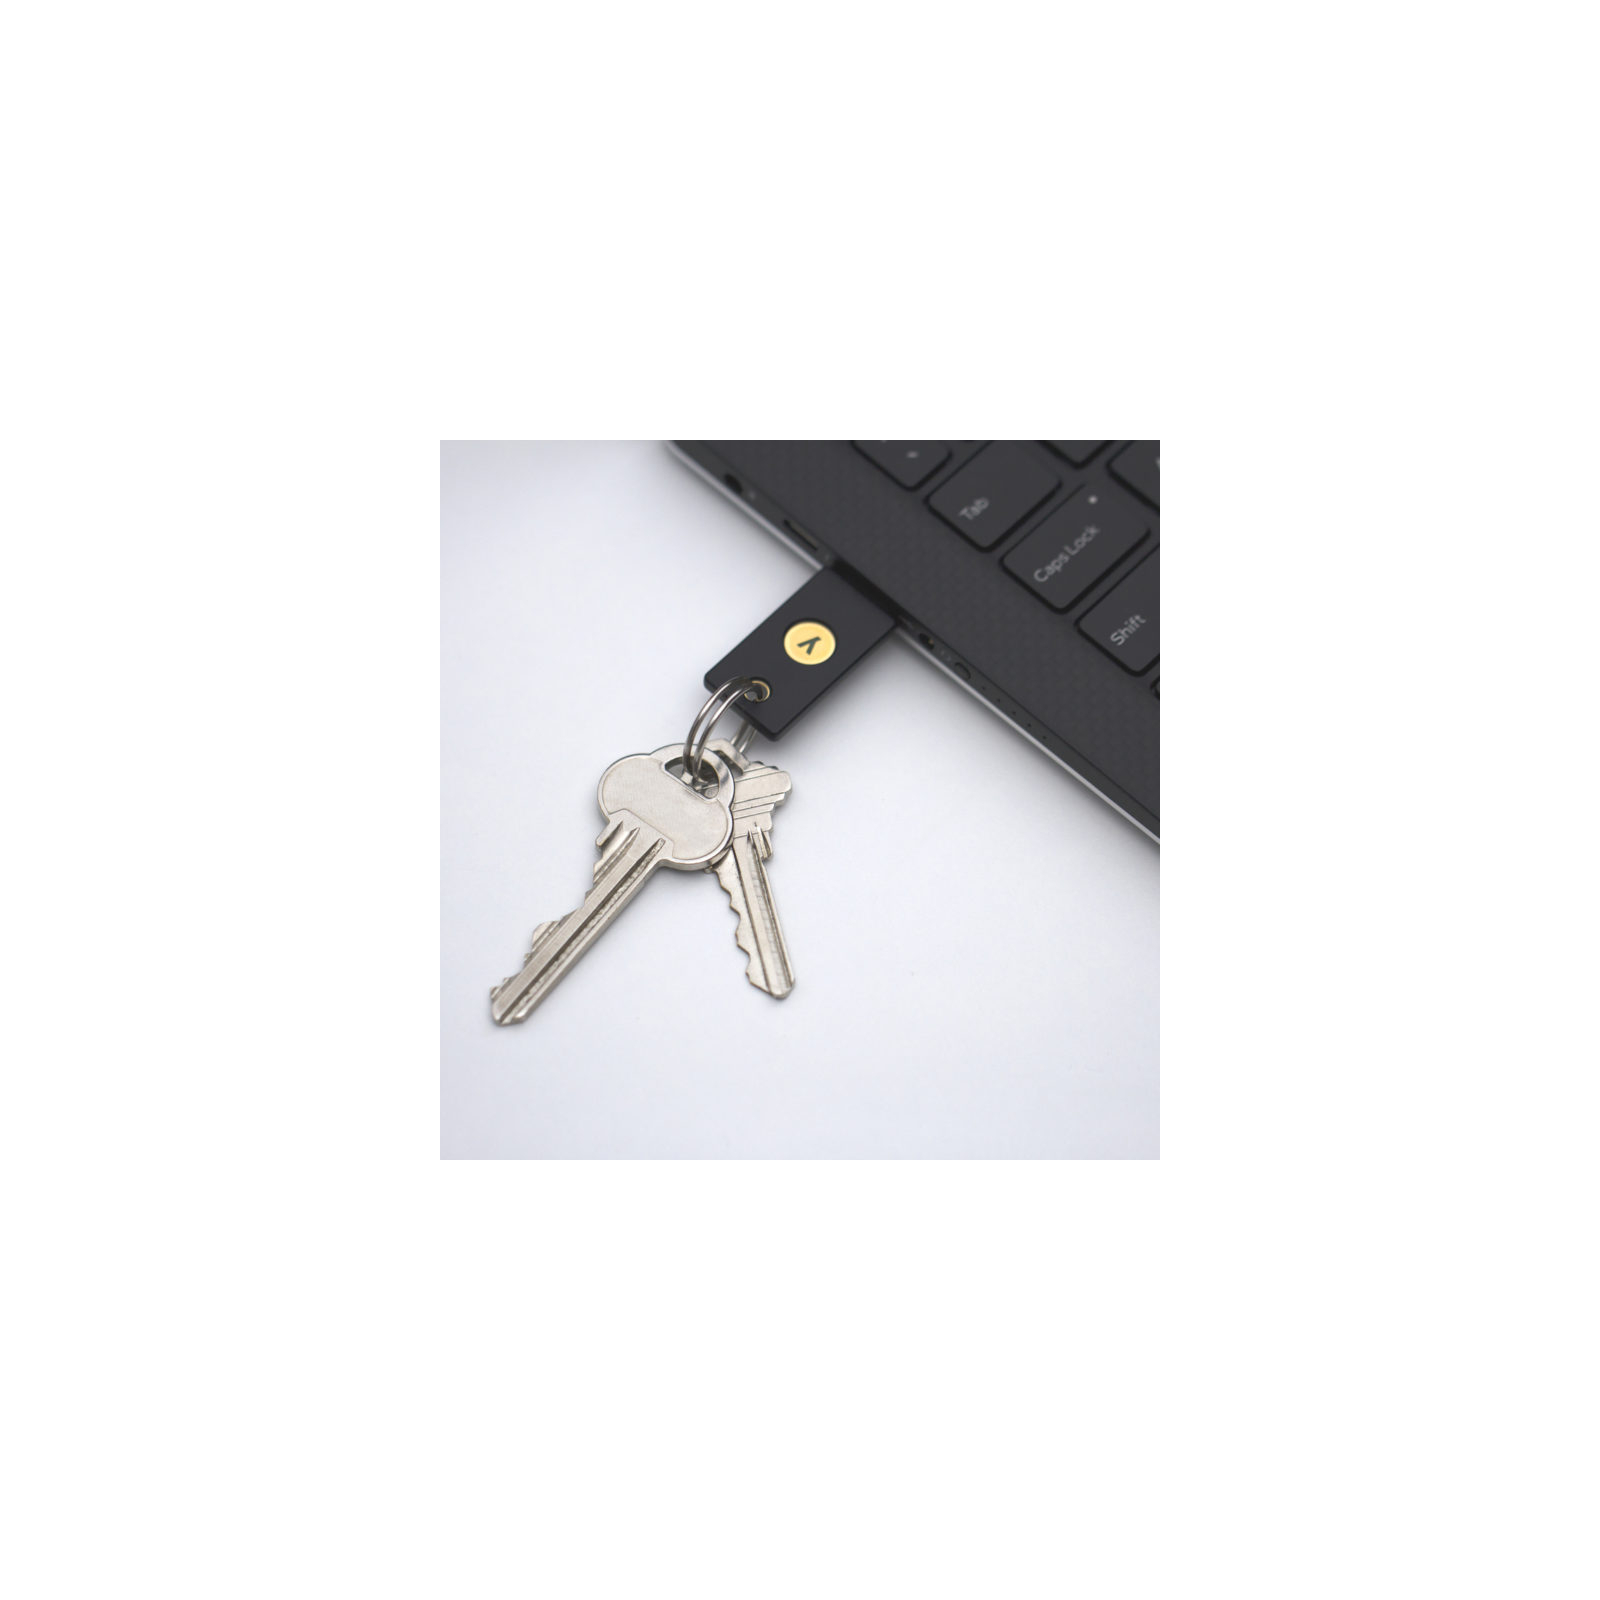 Аппаратный ключ безопасности Yubico YubiKey 5 NFC FIPS (YubiKey_5_NFC_FIPS) изображение 2